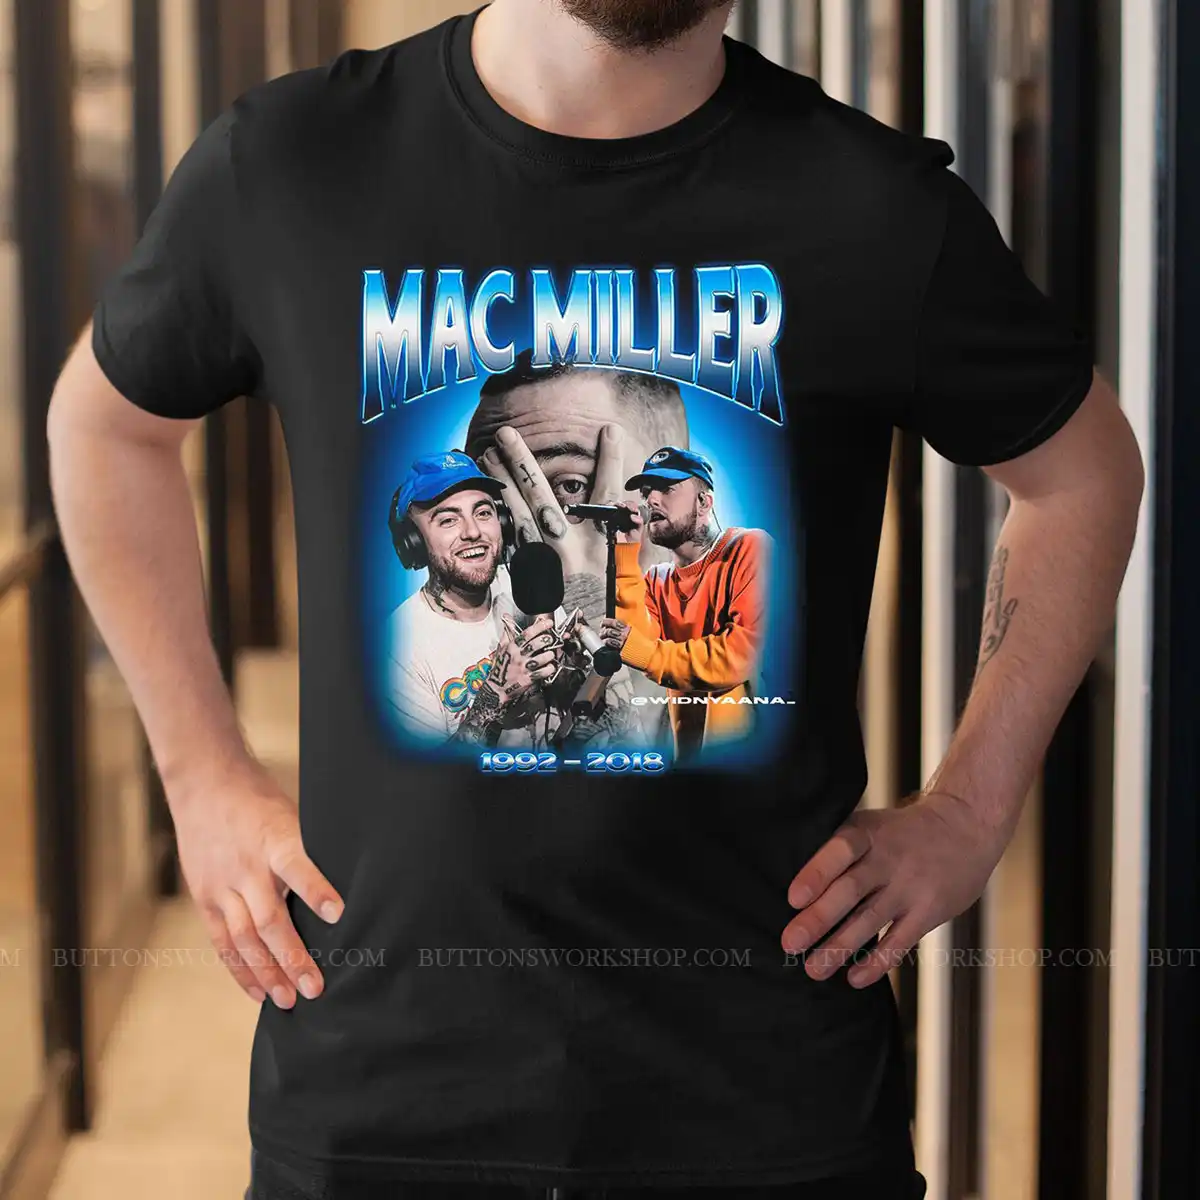 Mac Miller T-Shirts Unisex Tshirt